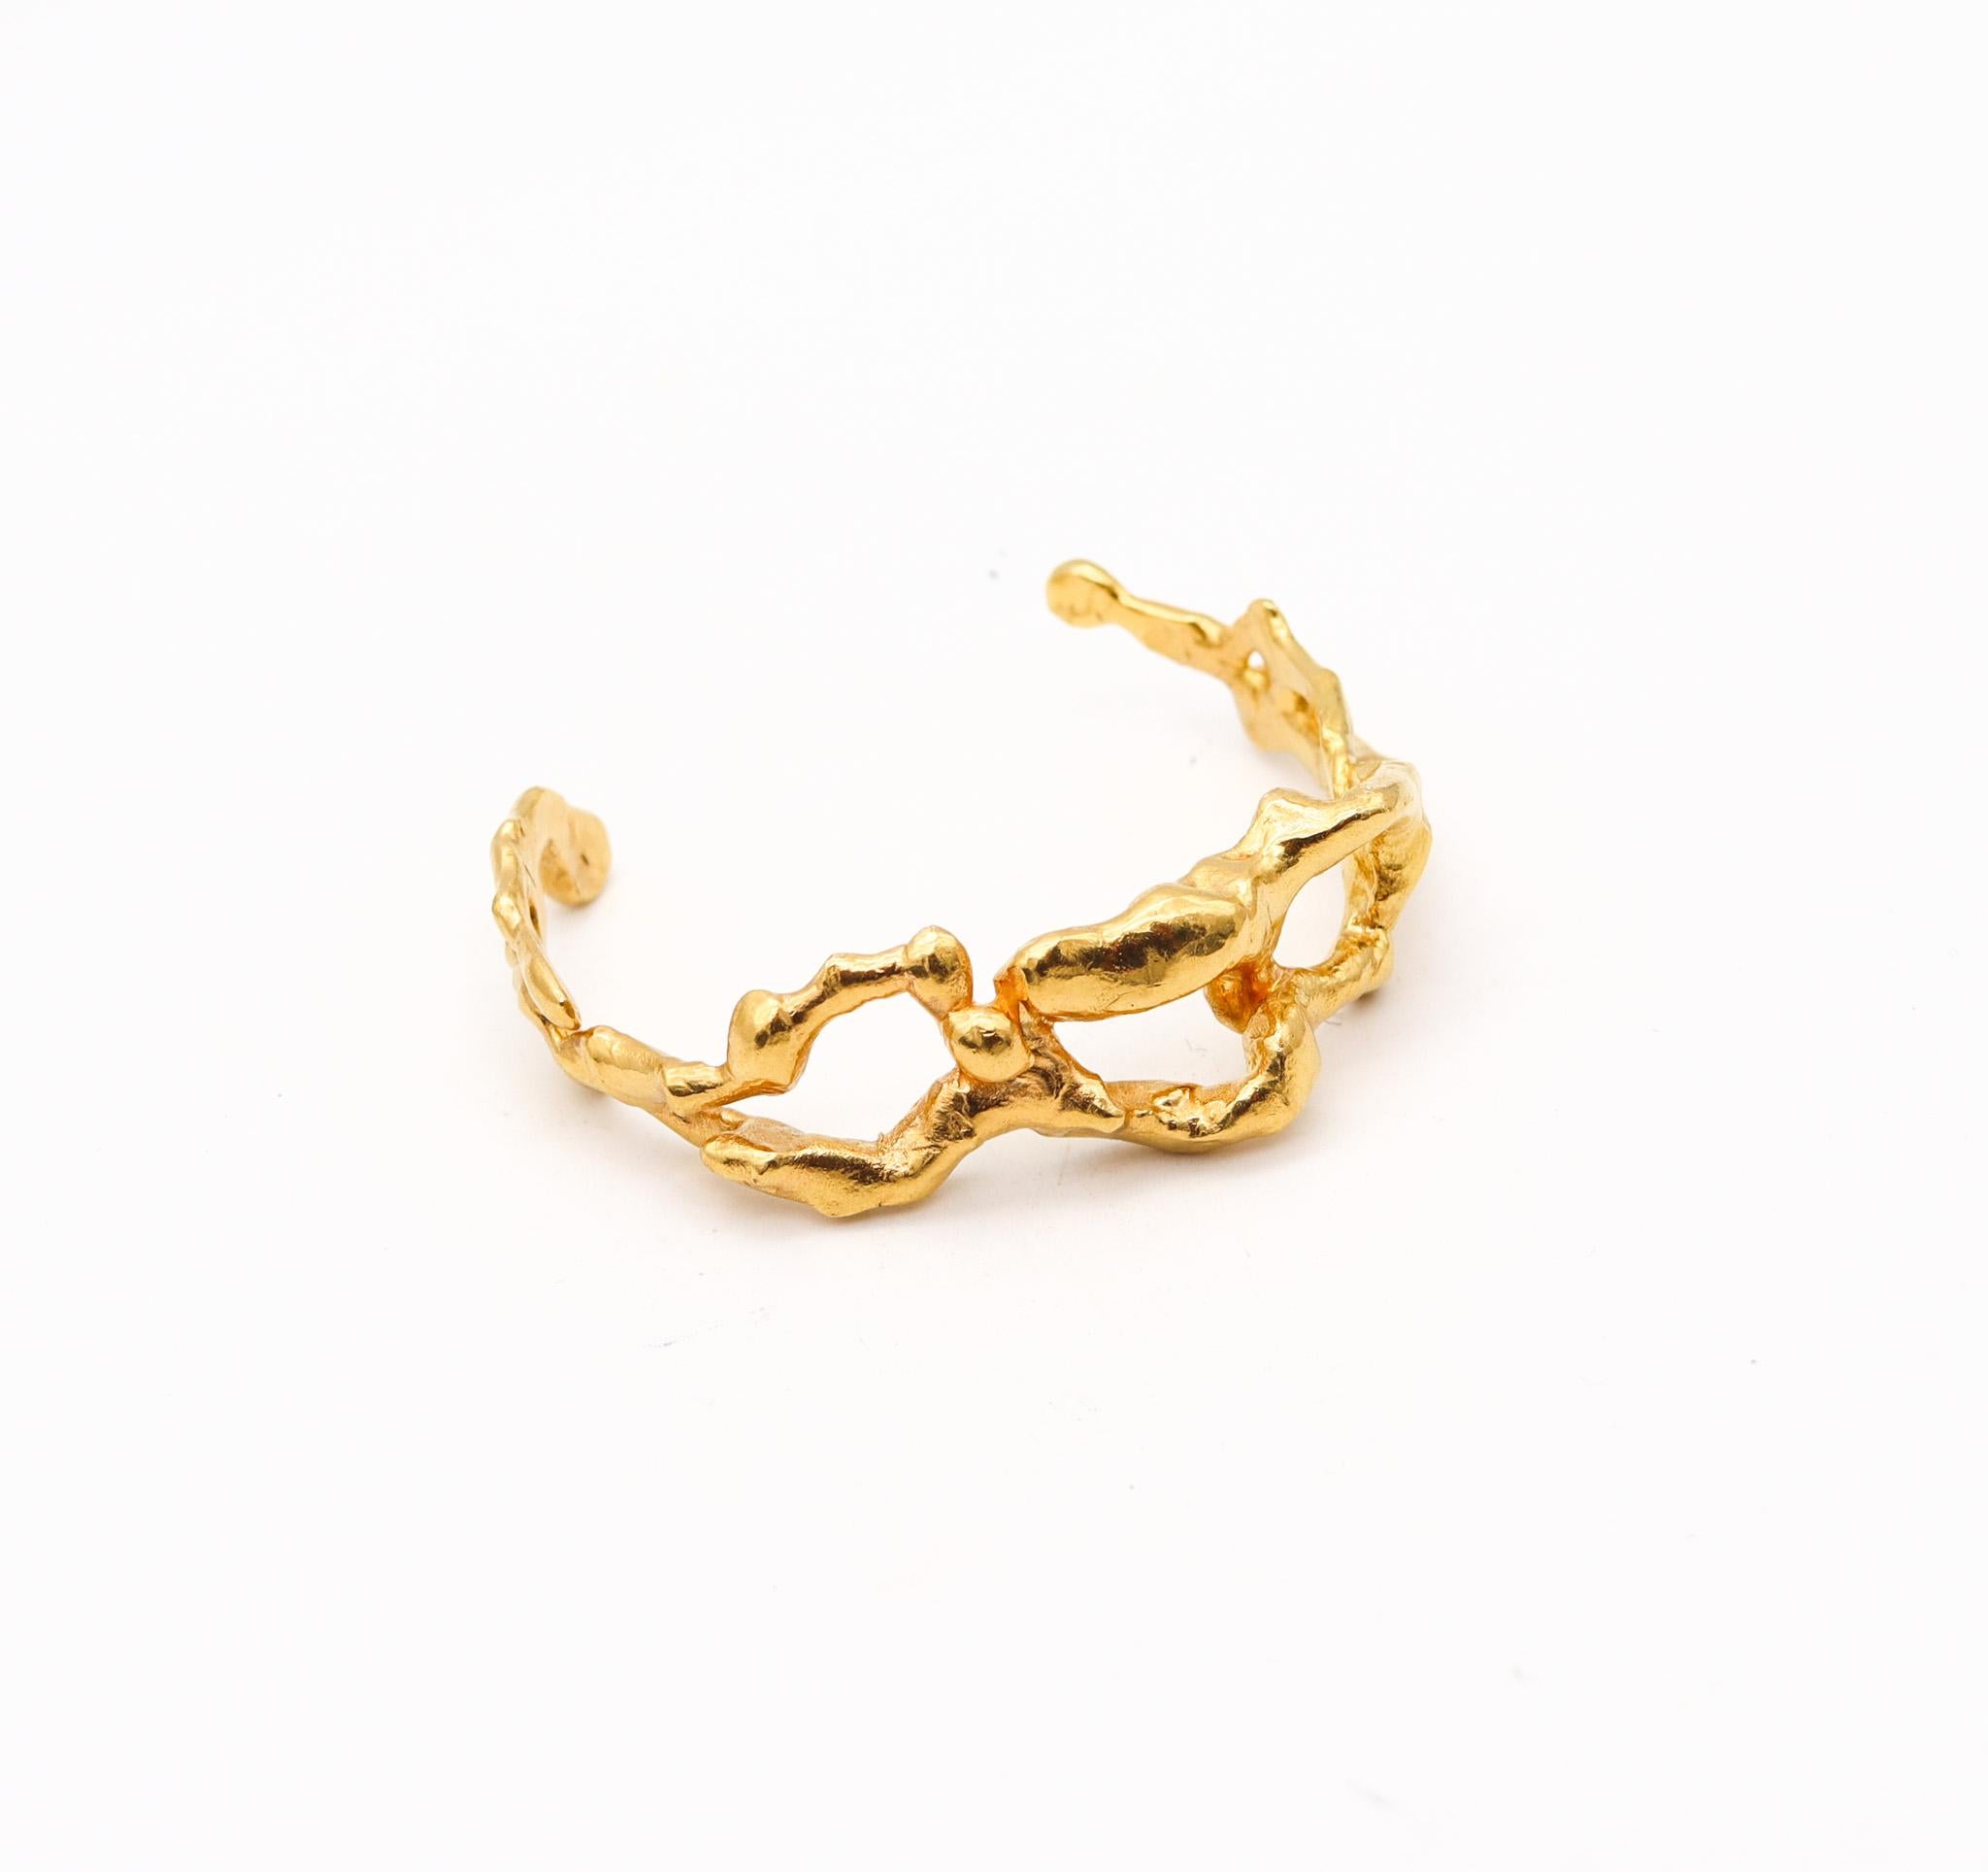 Modernist Jean Mahie 1970 Paris Sculptural Cuff Bracelet In Solid 22Kt Yellow Gold For Sale